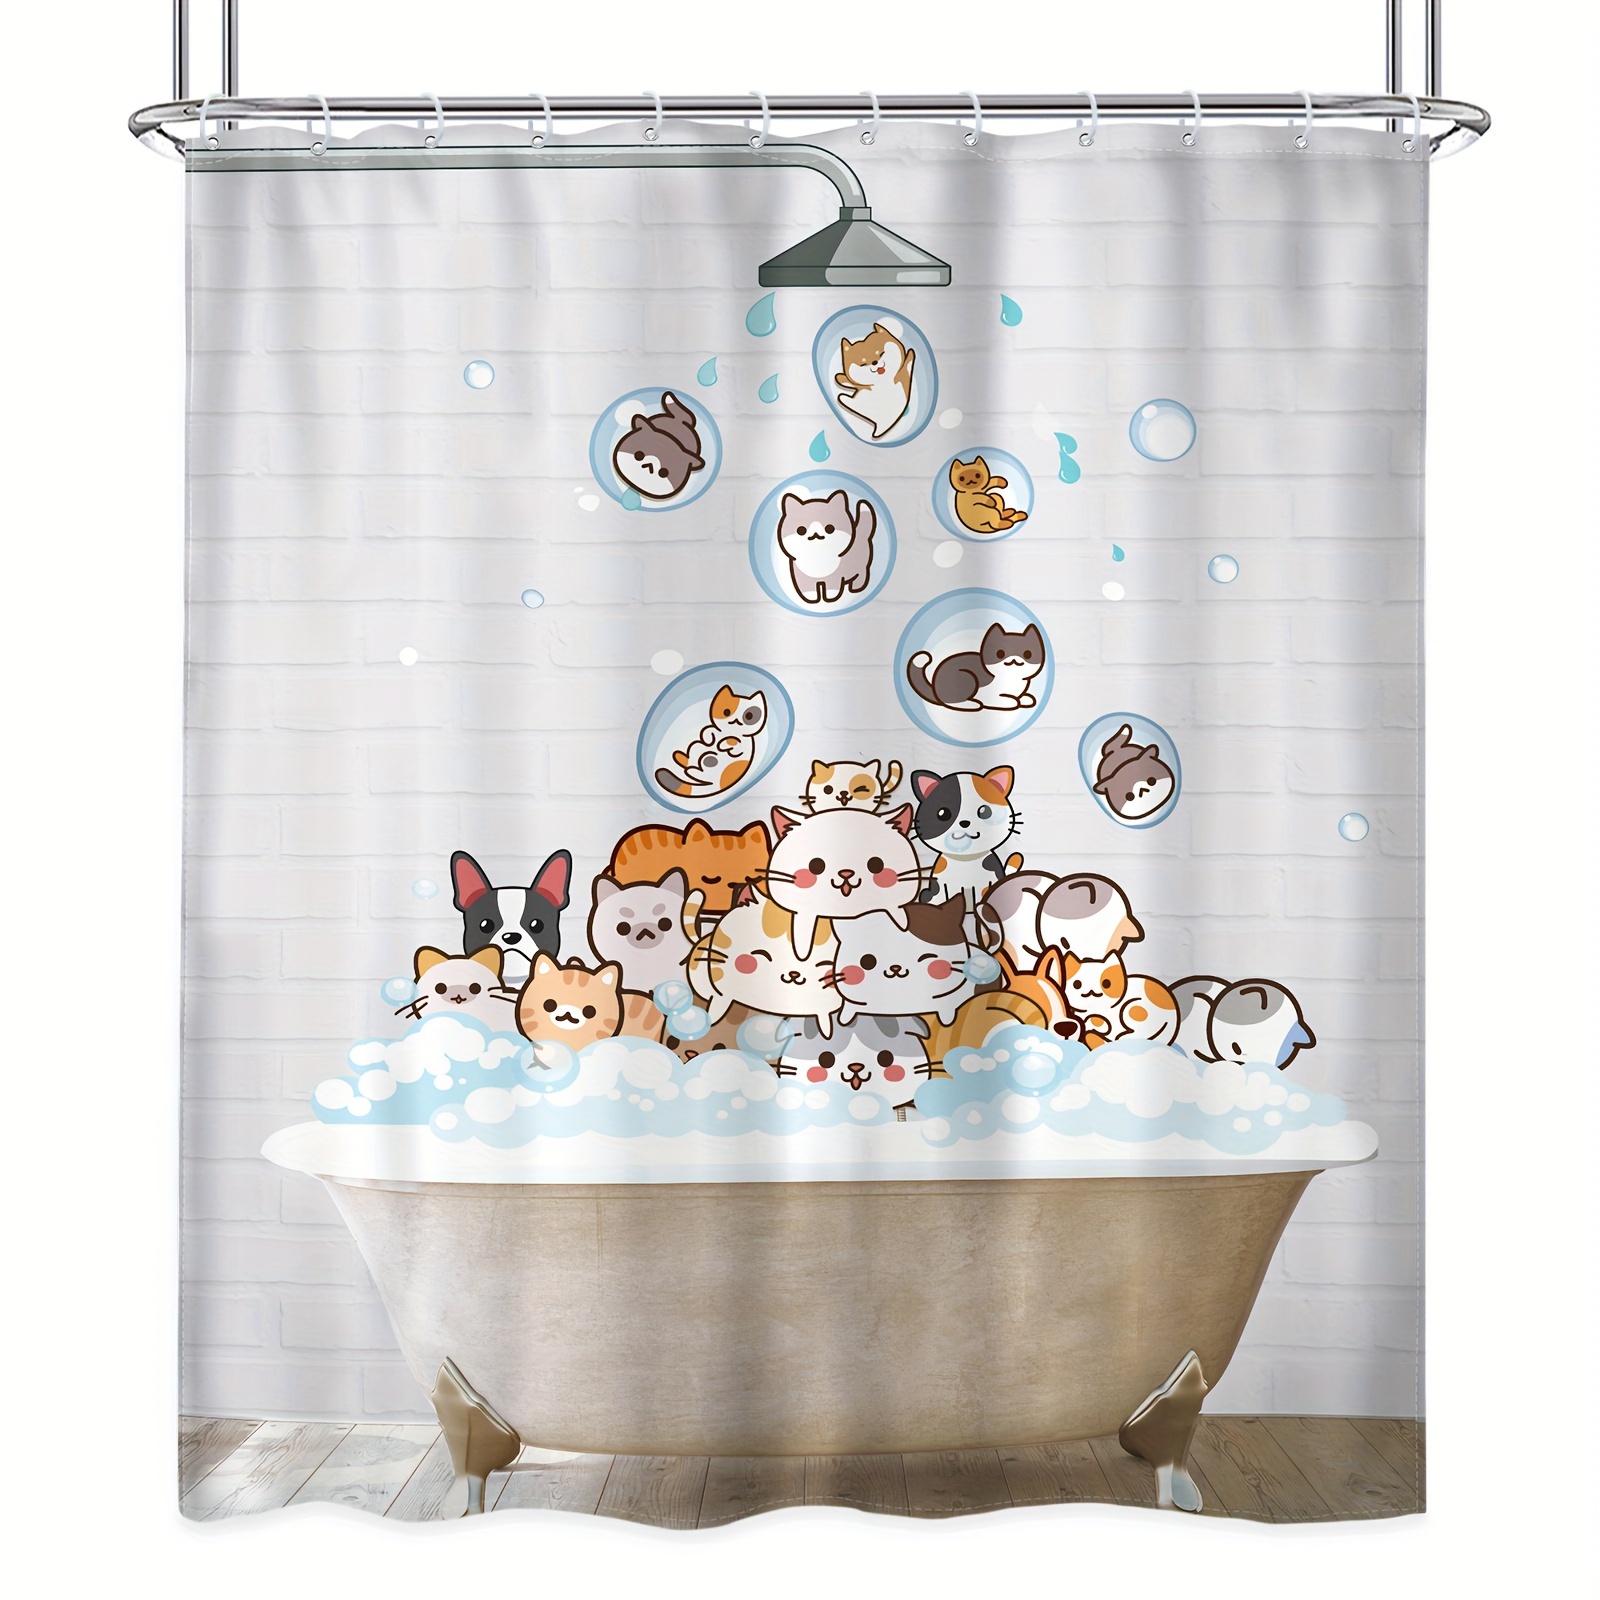 Heytea Divertida cortina de ducha con forma de gato bañándose, 72 x 72 h,  para niños, lindo animal d YONGSHENG